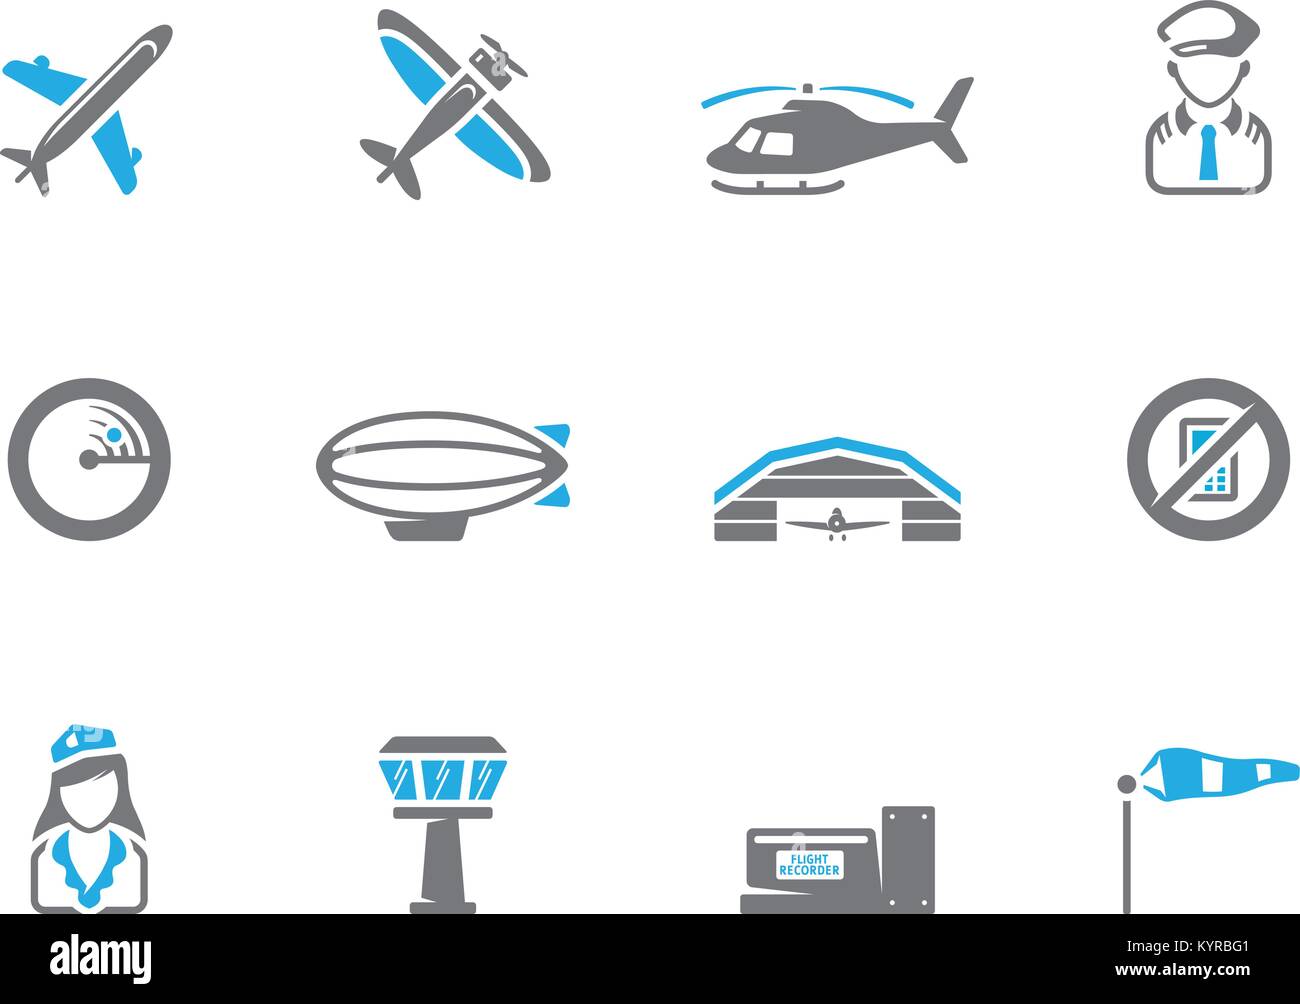 Icone di aviazione in duo tonalità di colore. Illustrazione Vettoriale. Illustrazione Vettoriale